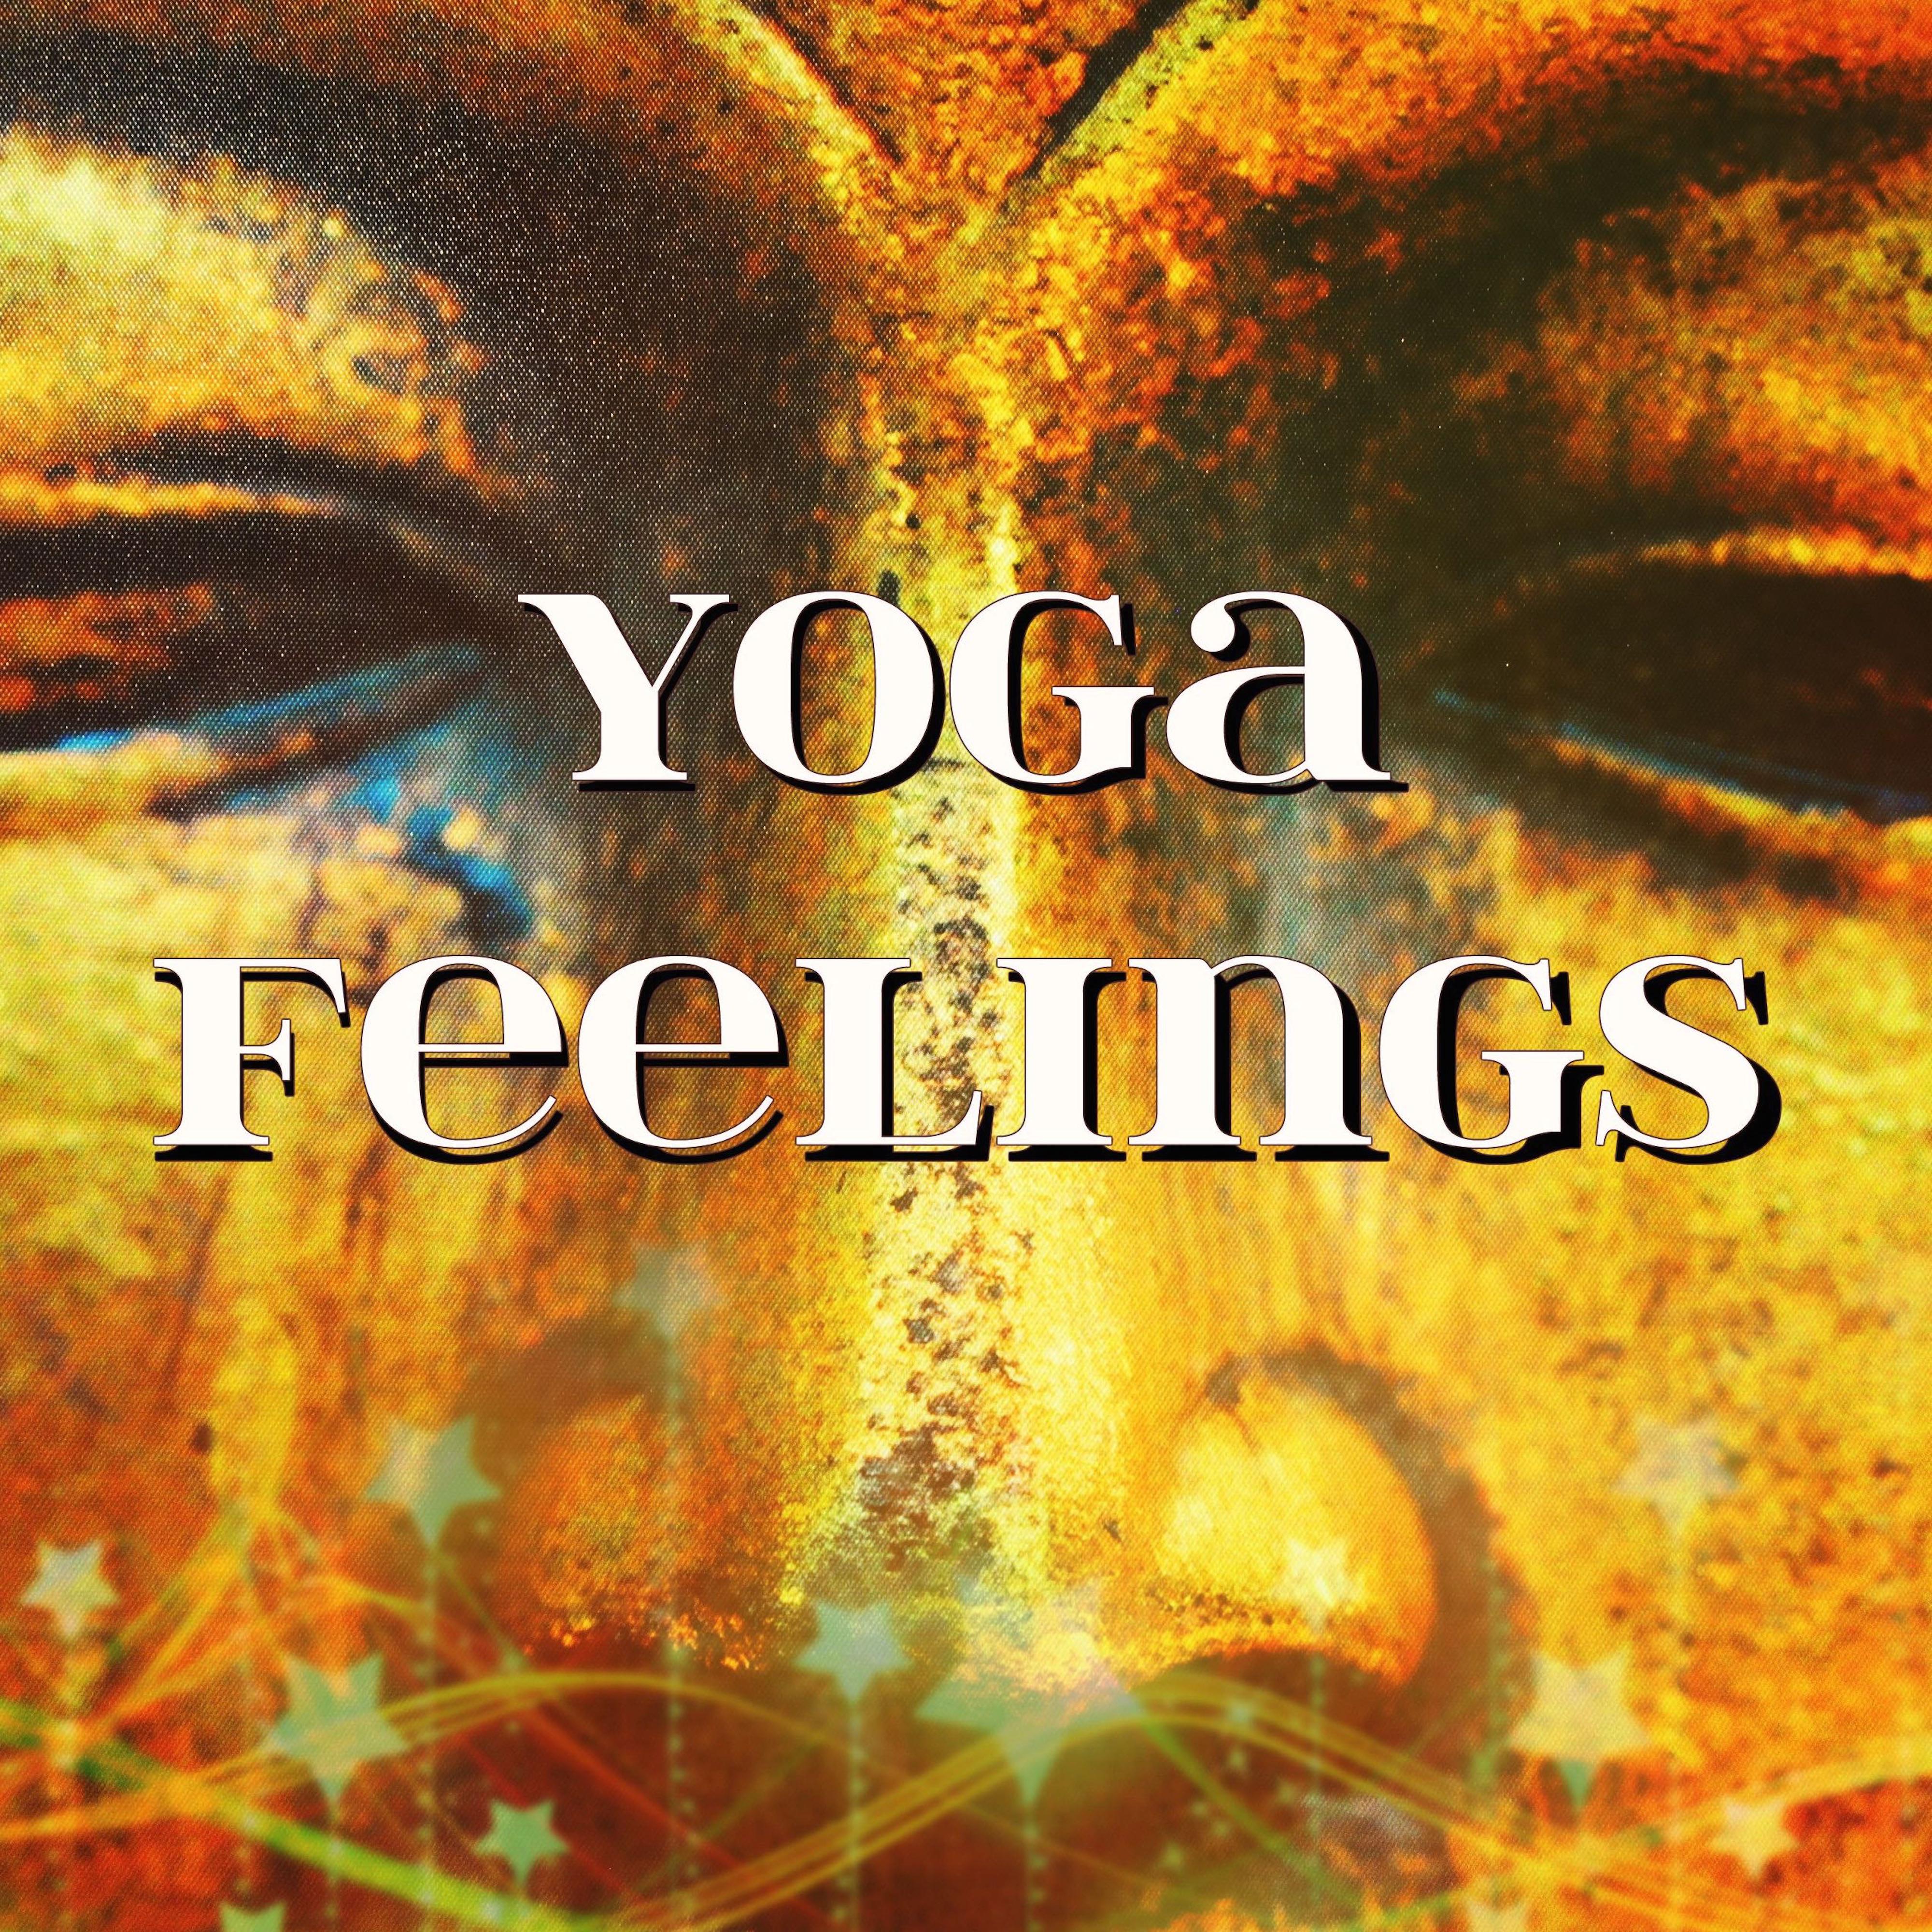 Yoga Feelings (Ambient Music)